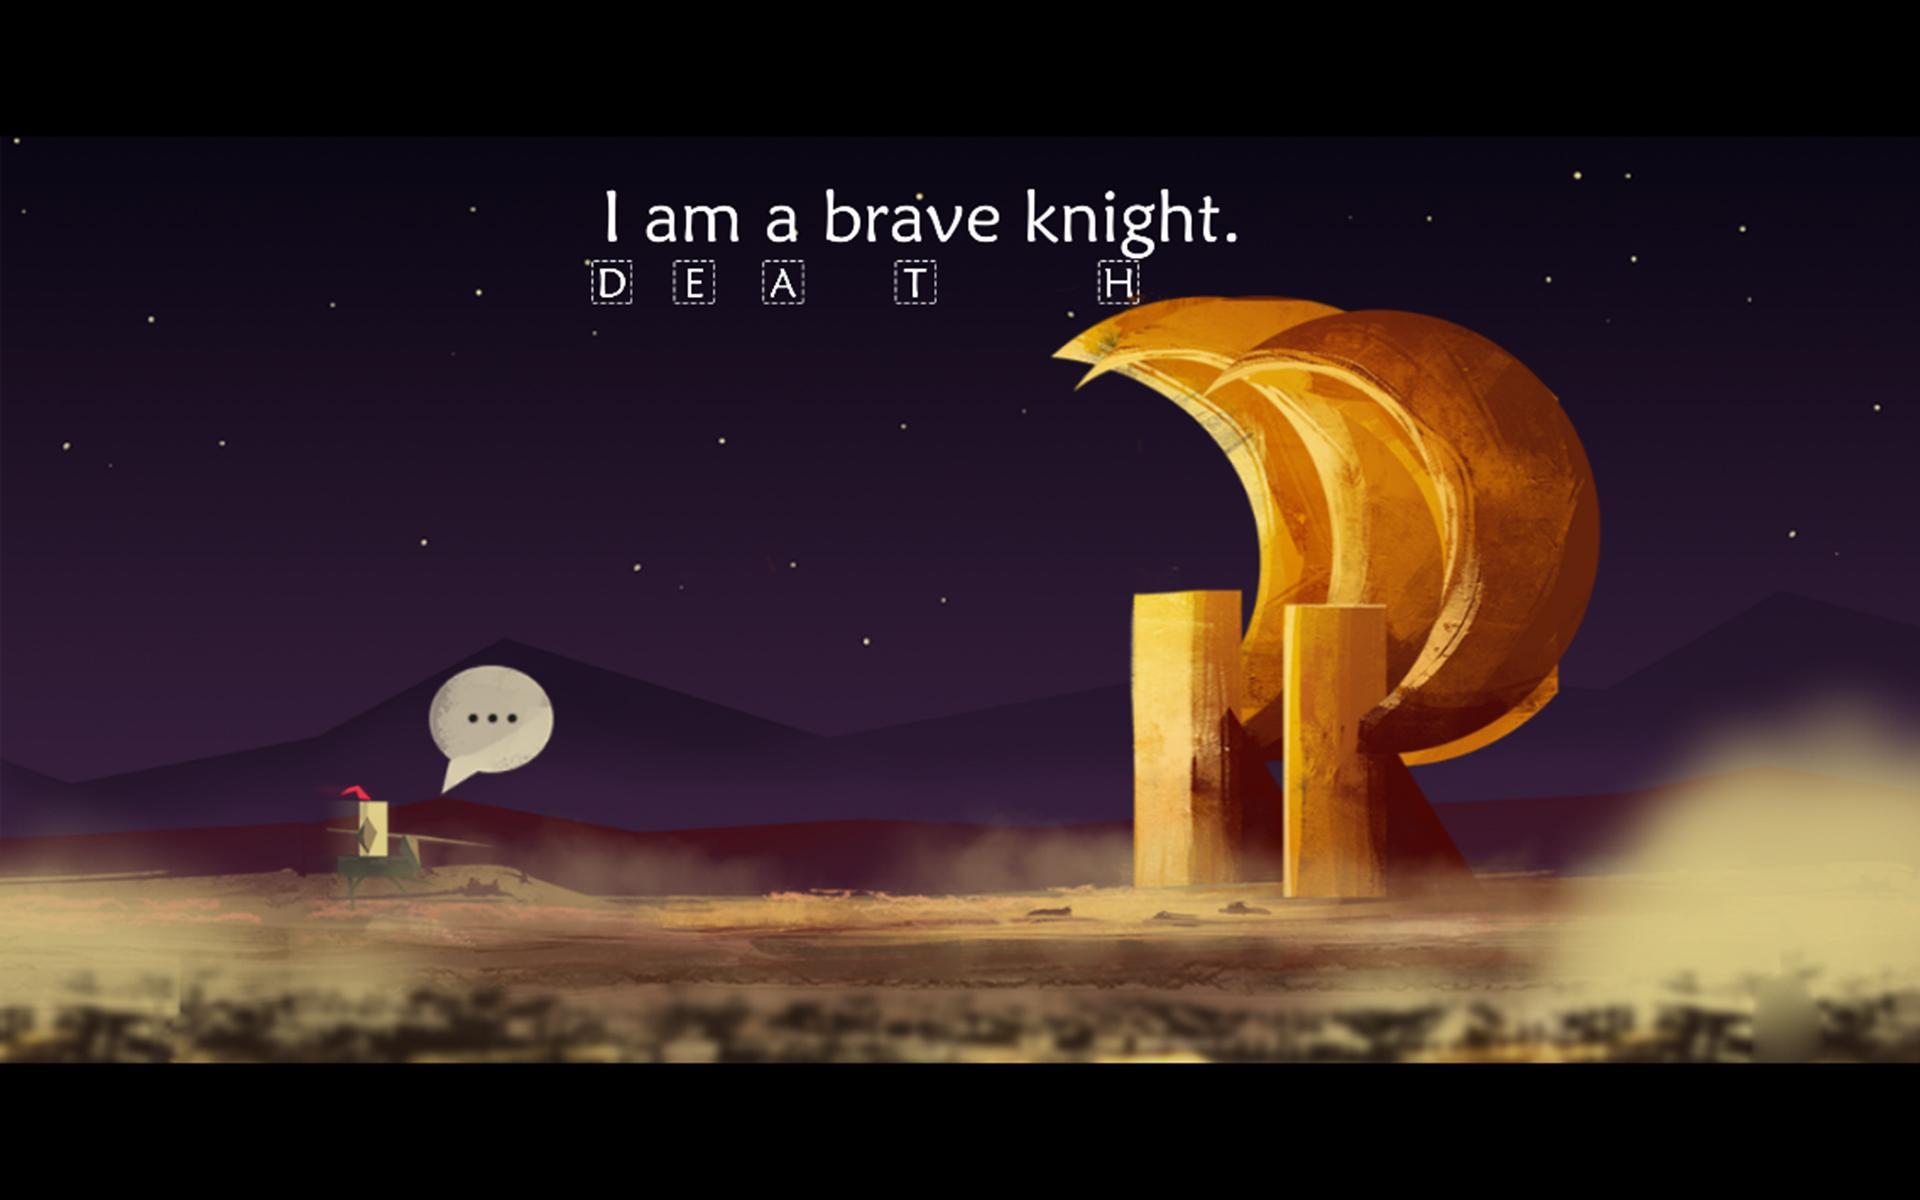 Screenshot 1 of 私は勇敢な騎士です 2